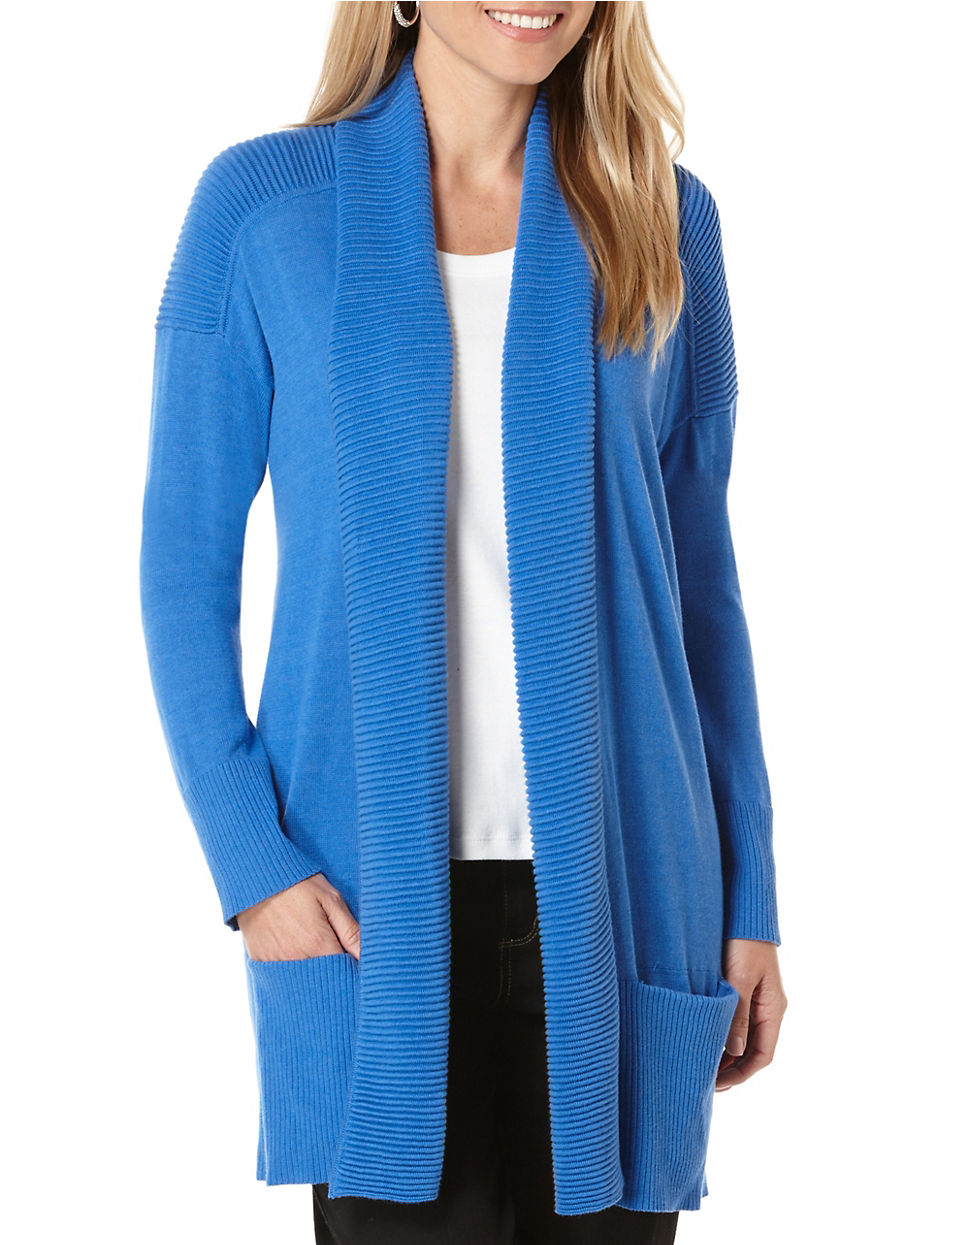 Lyst - Rafaella Solid Ottoman Stitch Sweater in Blue